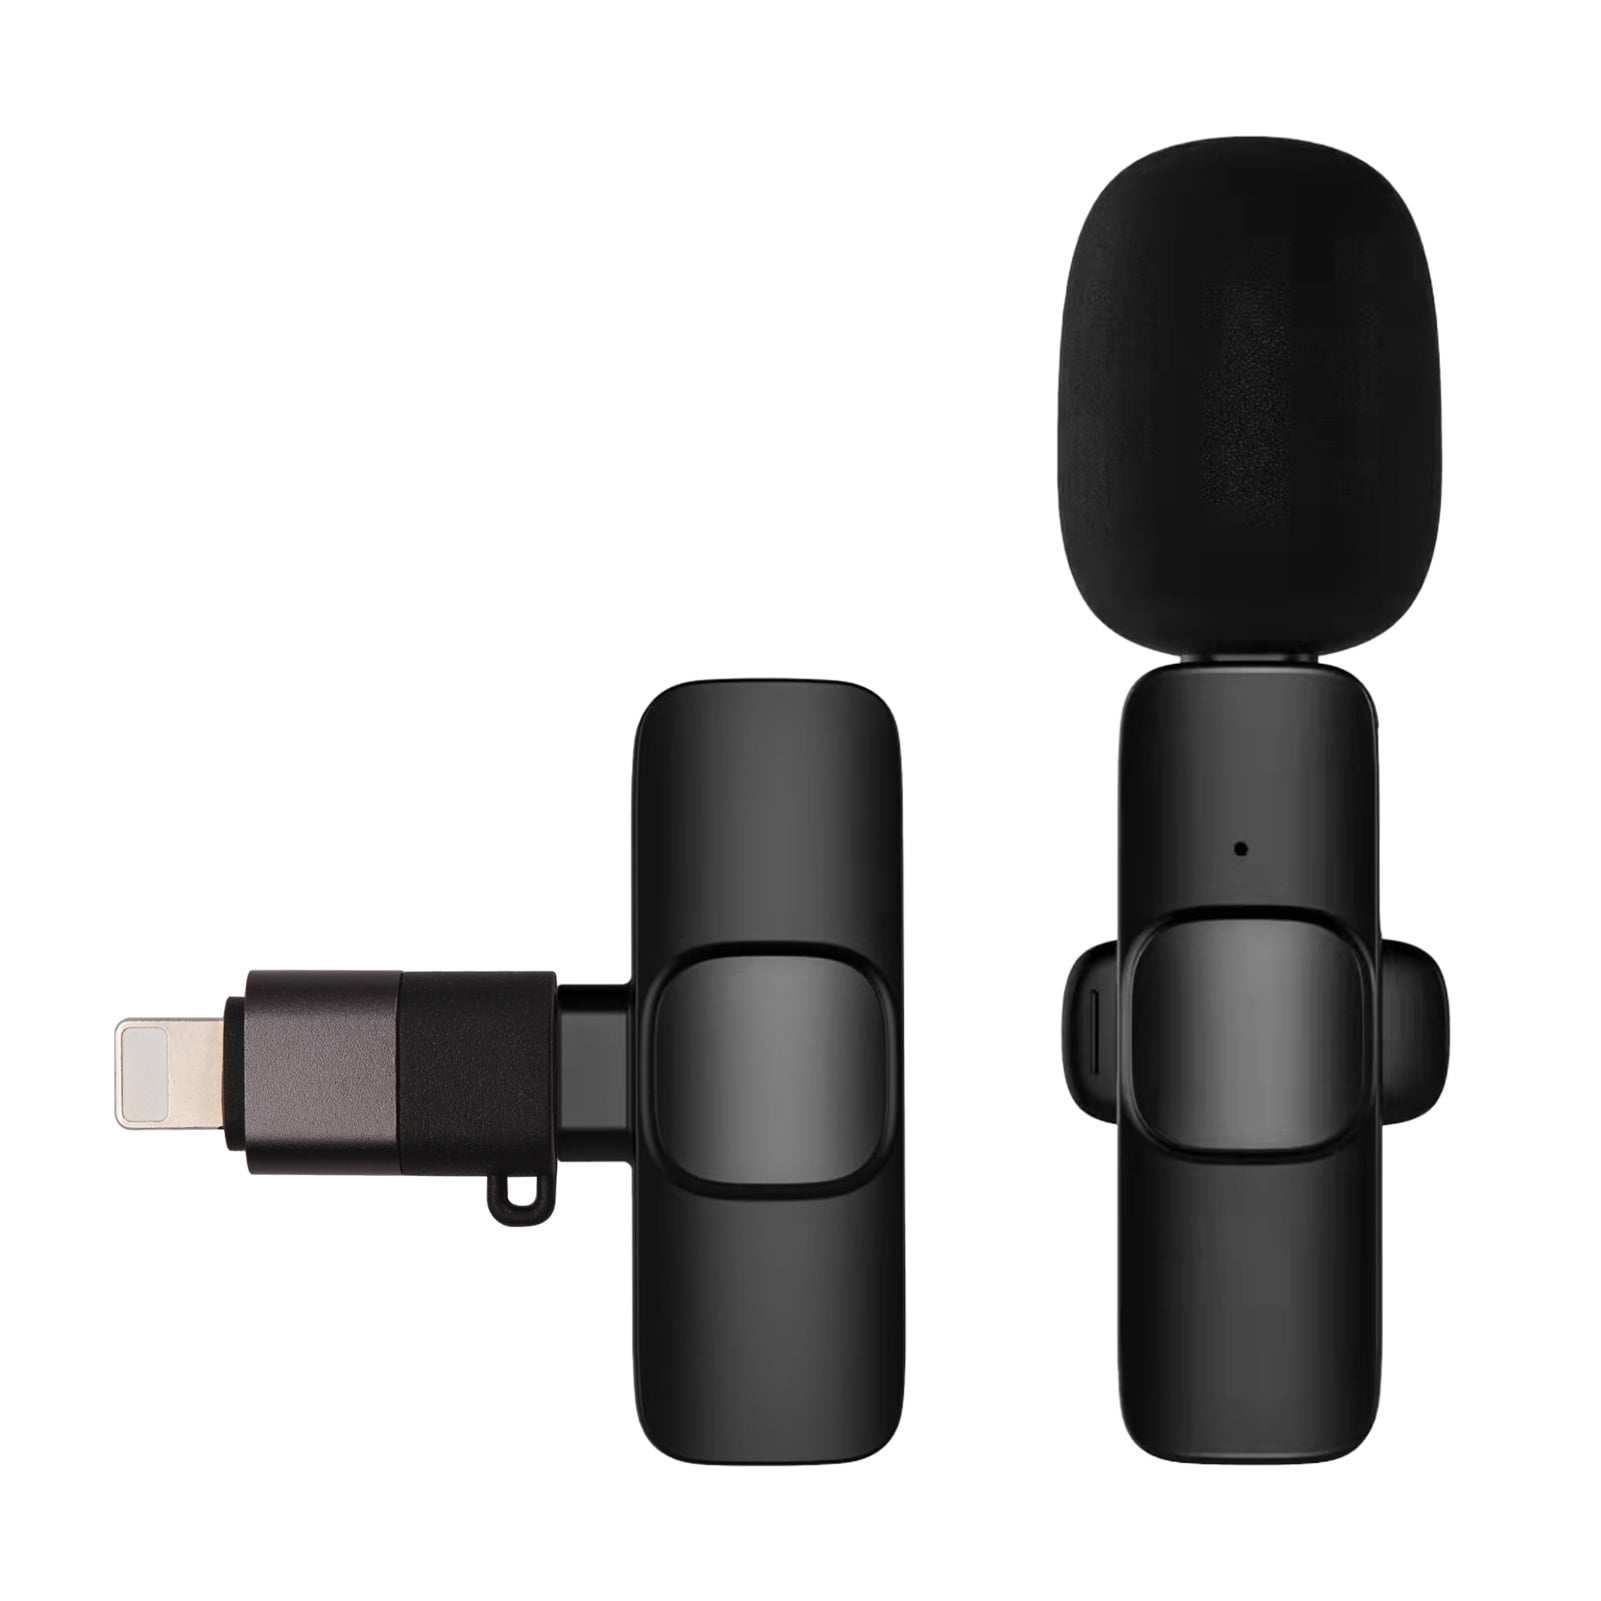 TECURS vs MRSDY USB Microphone Comparison 